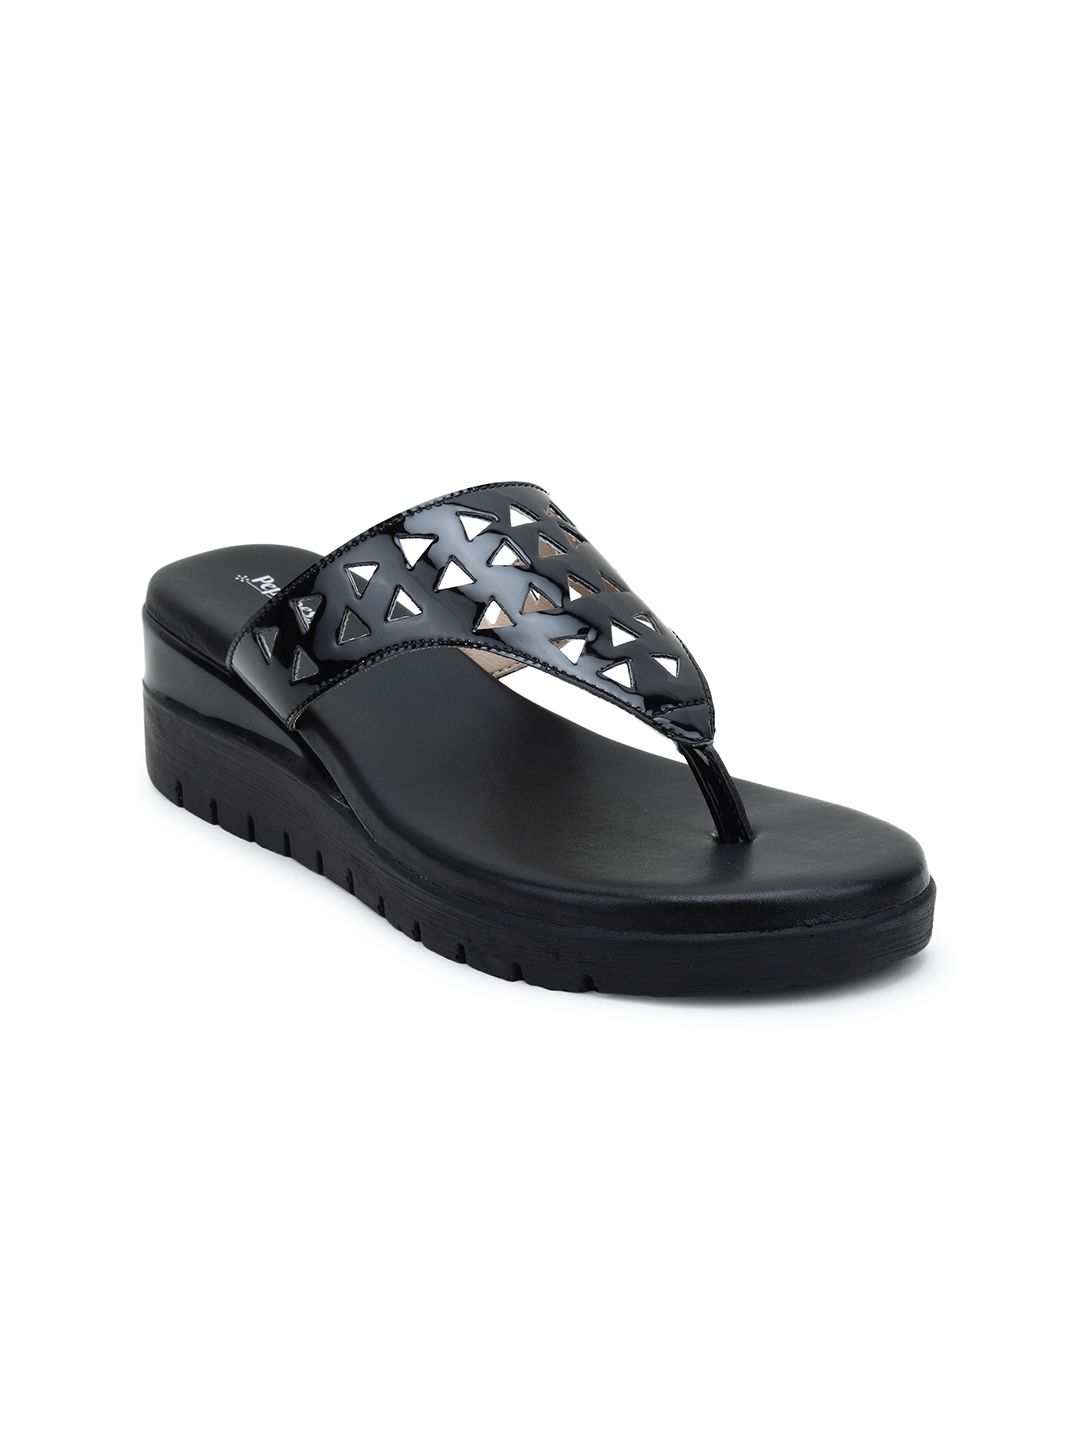 PEPITOES Black Flatform Sandals Price in India